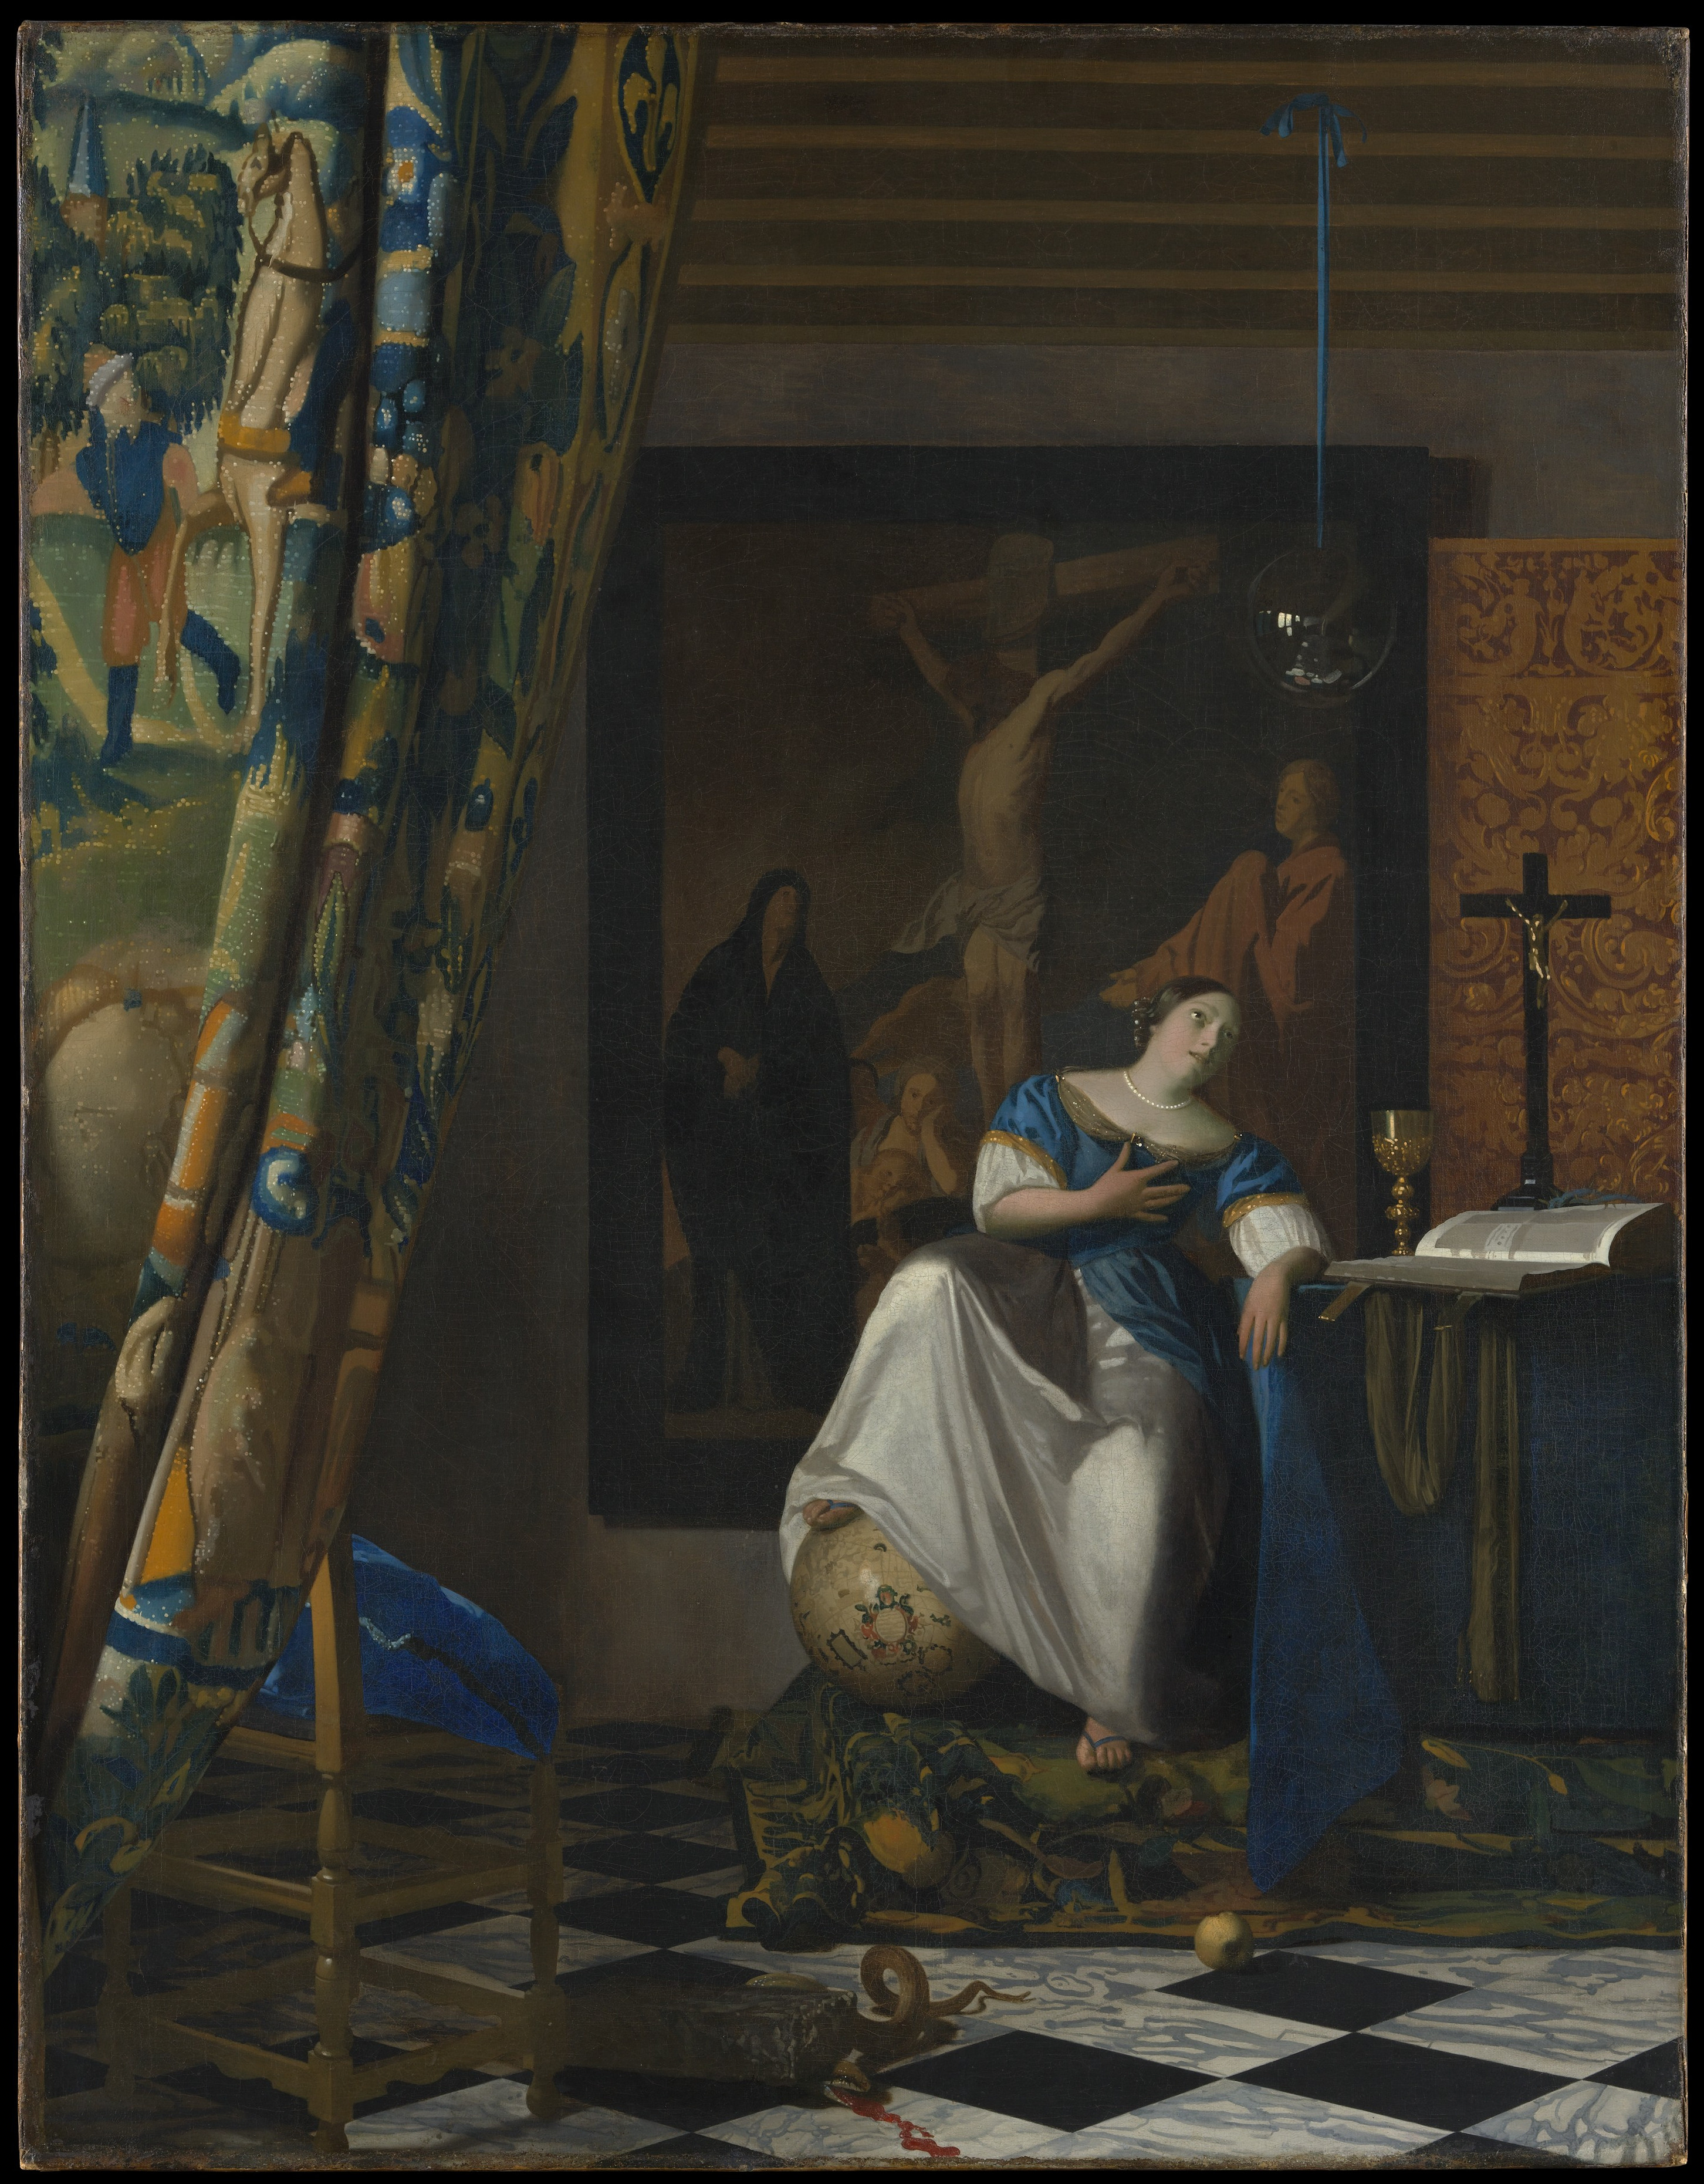 Allegory of Faith by Johannes Vermeer - 1671-1674 - 114.3 x 88.9 cm Metropolitan Museum of Art